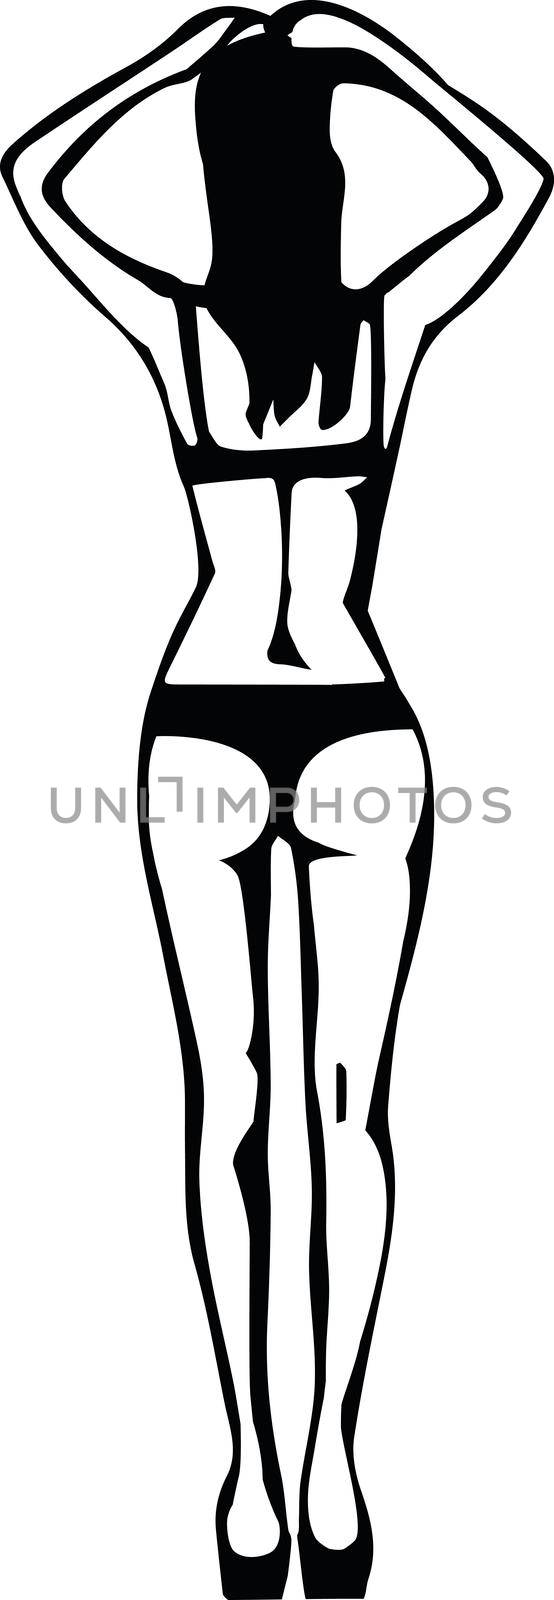 Woman silhouette in lingerie. by aroas